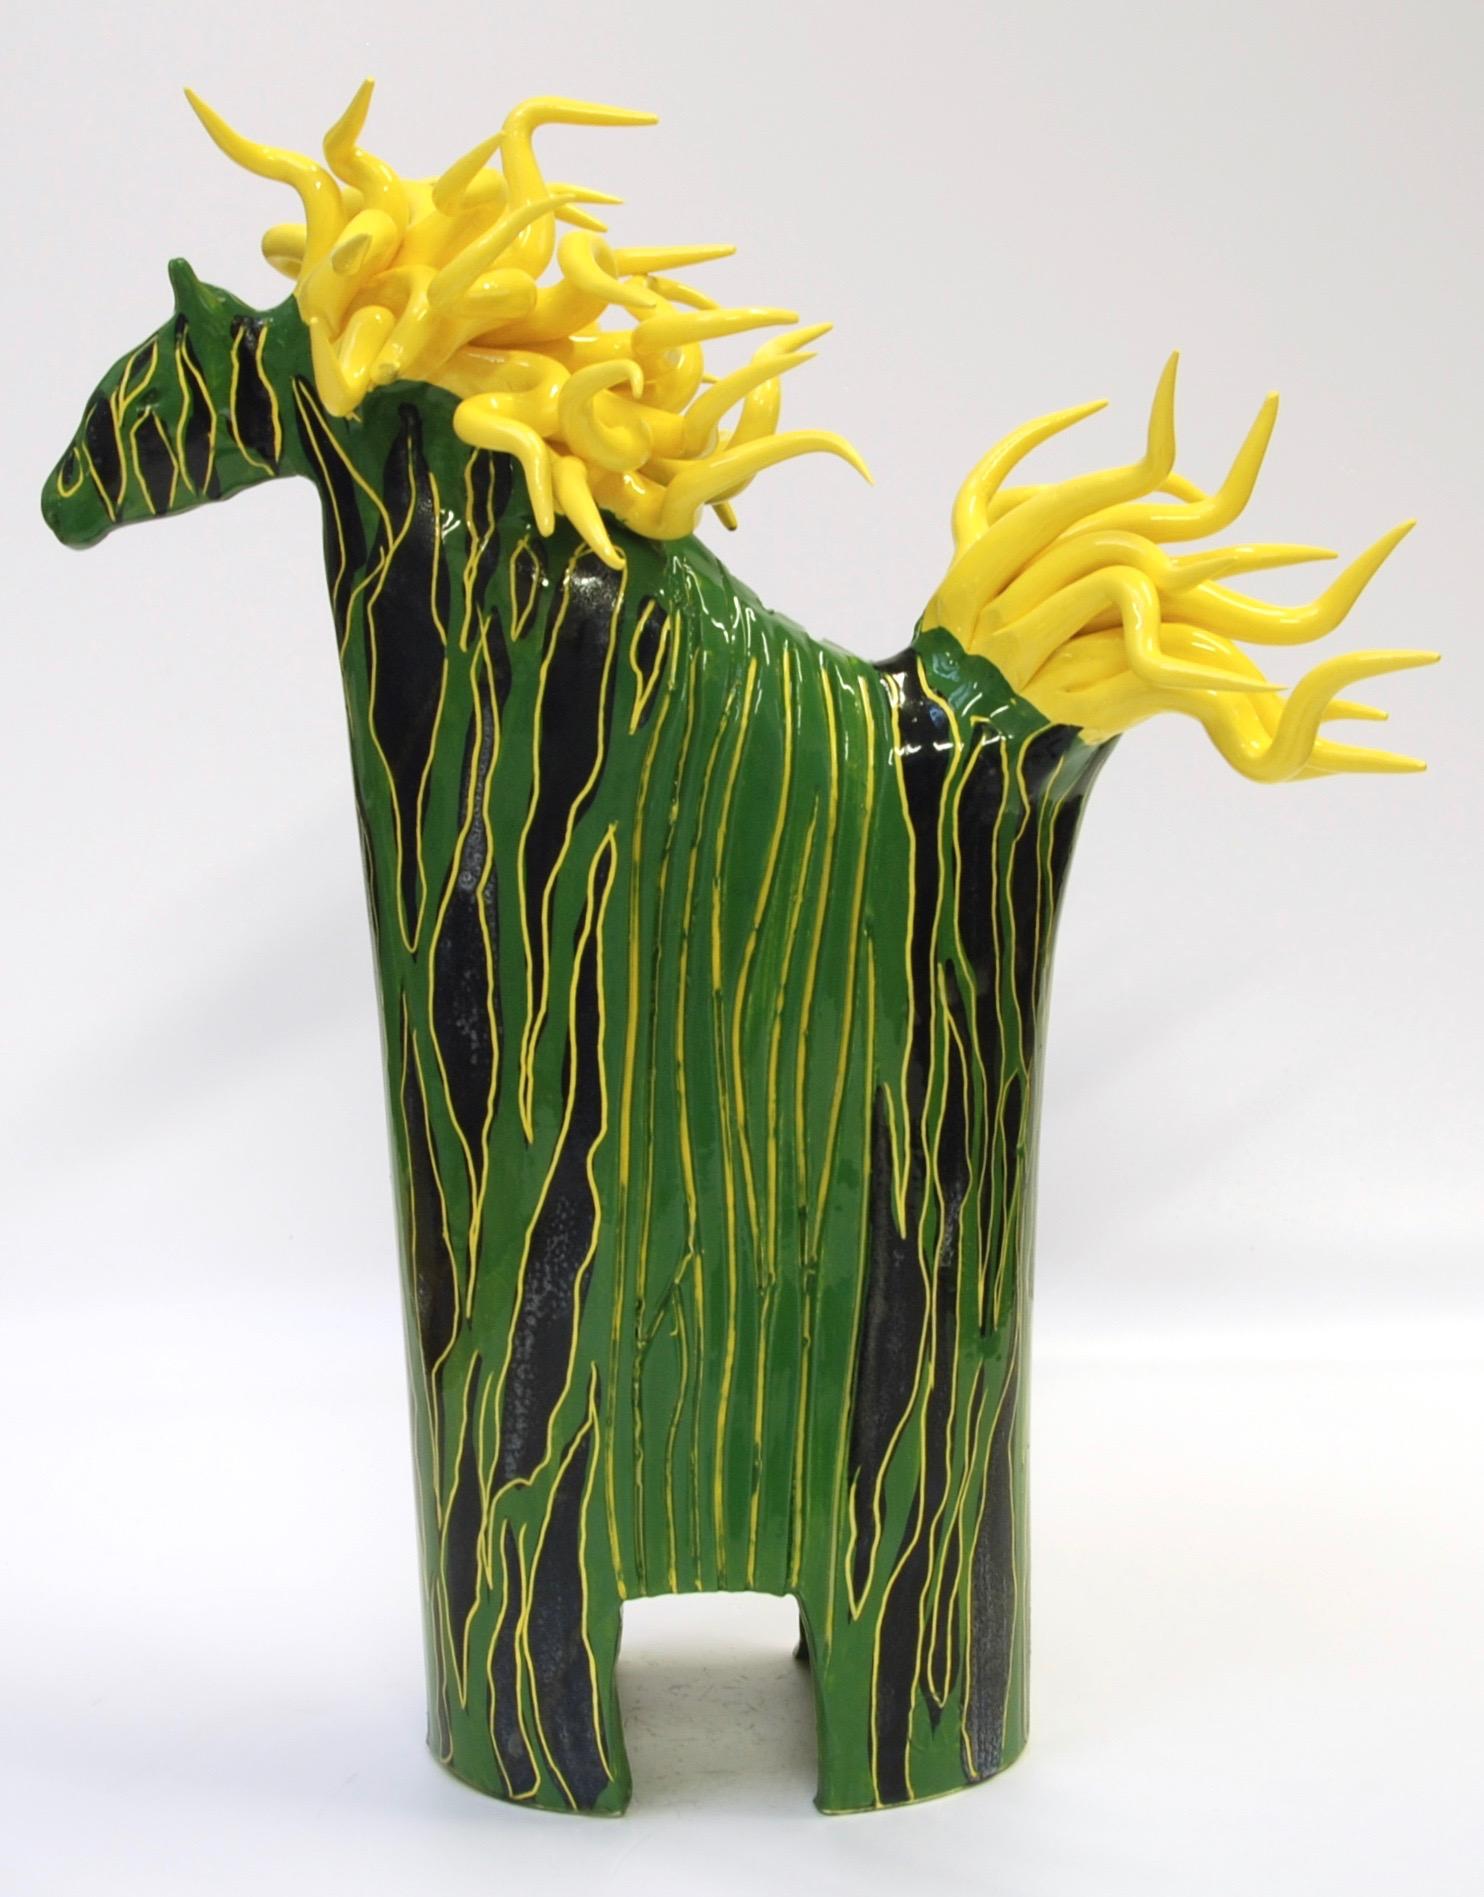 Italian Futurist Horses, Decorative Centerpiece Handmade Italy 2020, Hand-Crafted For Sale